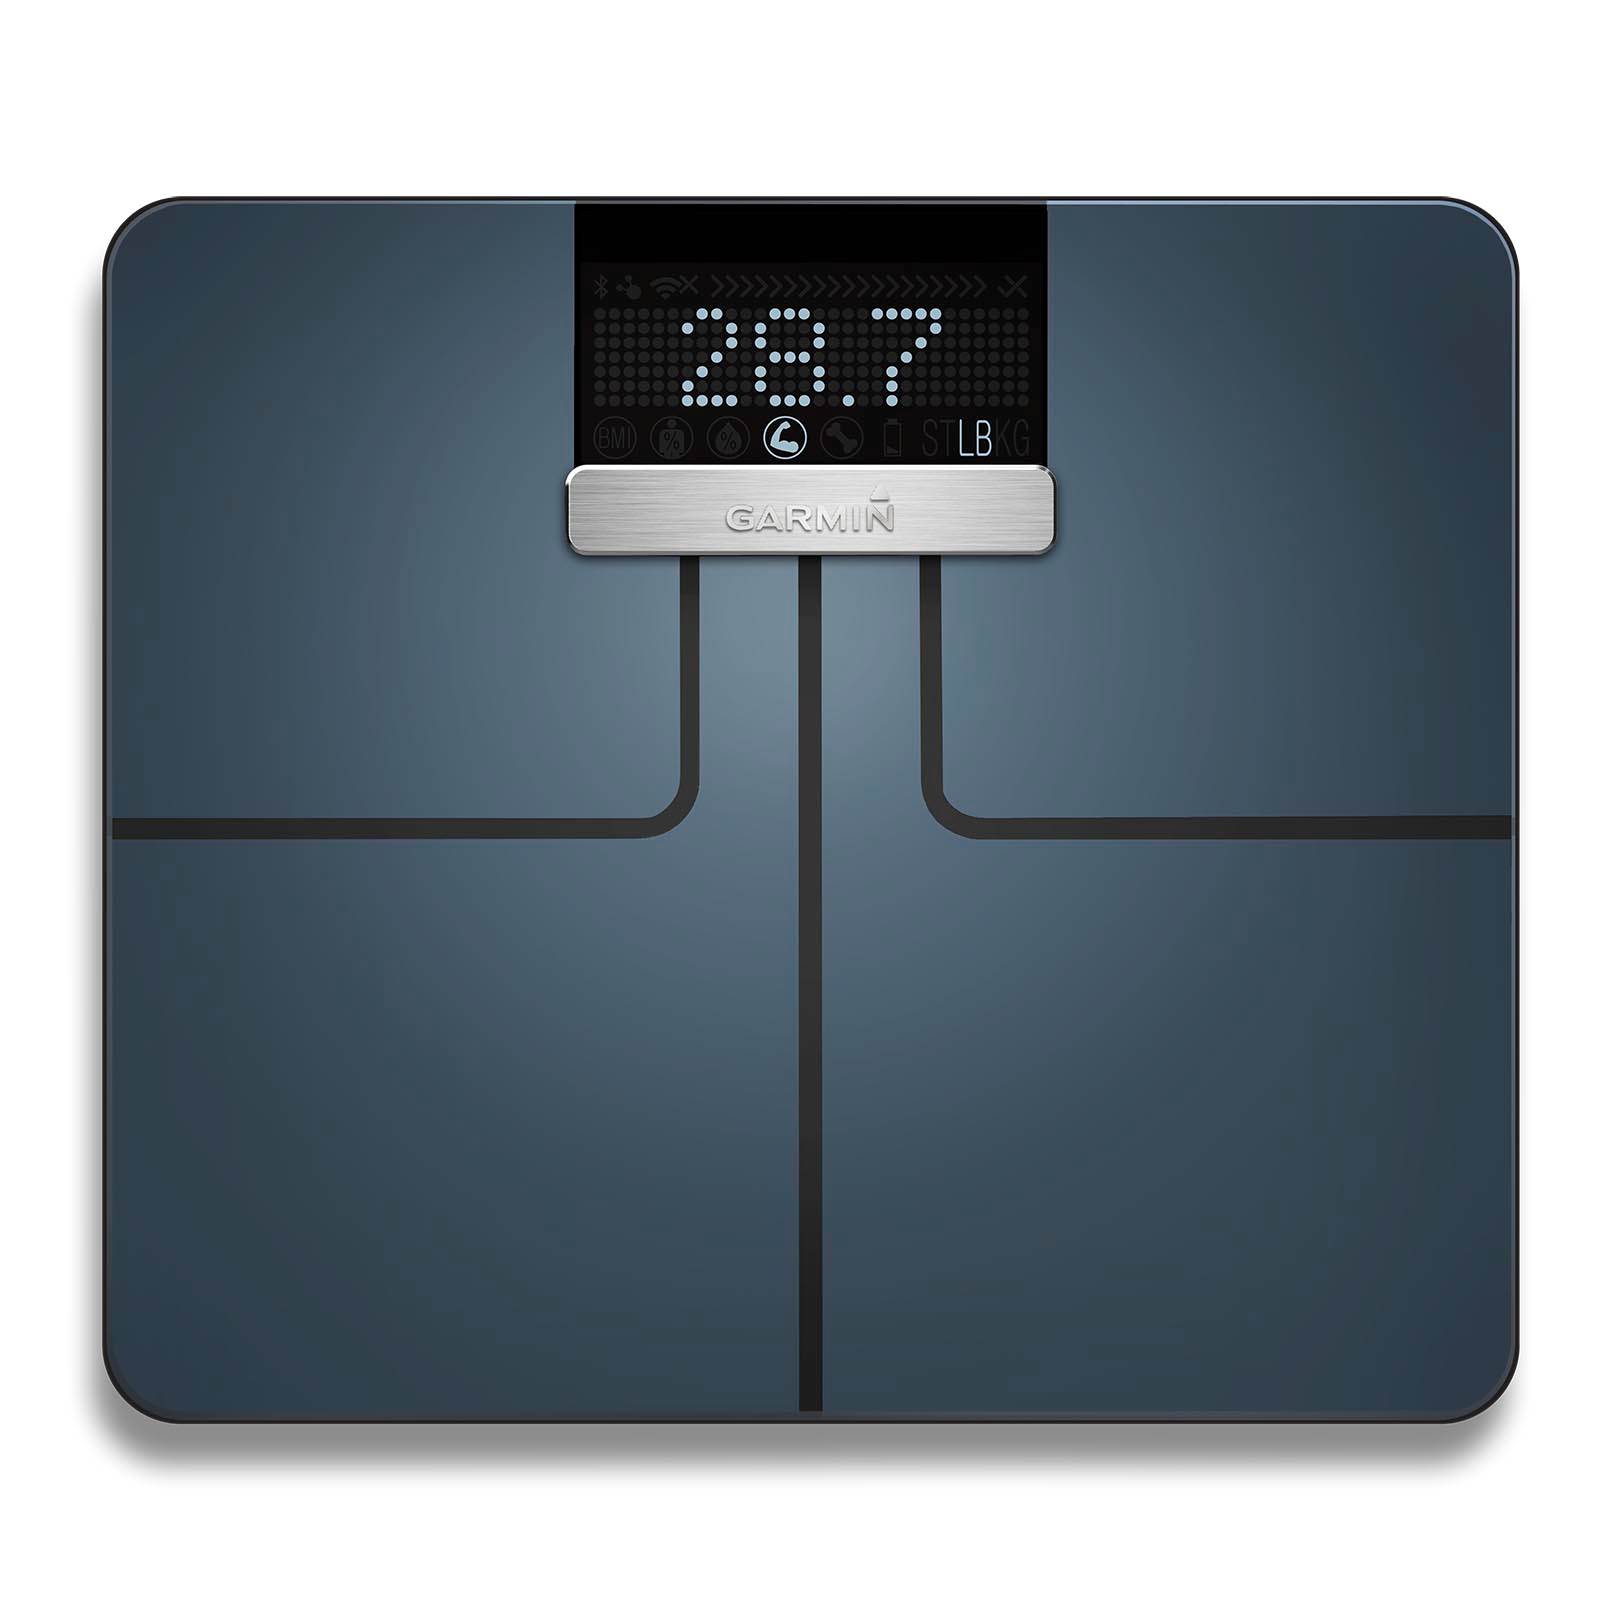 Garmin Index Smart WiFi Bluetooth BMI Calculator Digital Weight Scale, Black - image 1 of 9